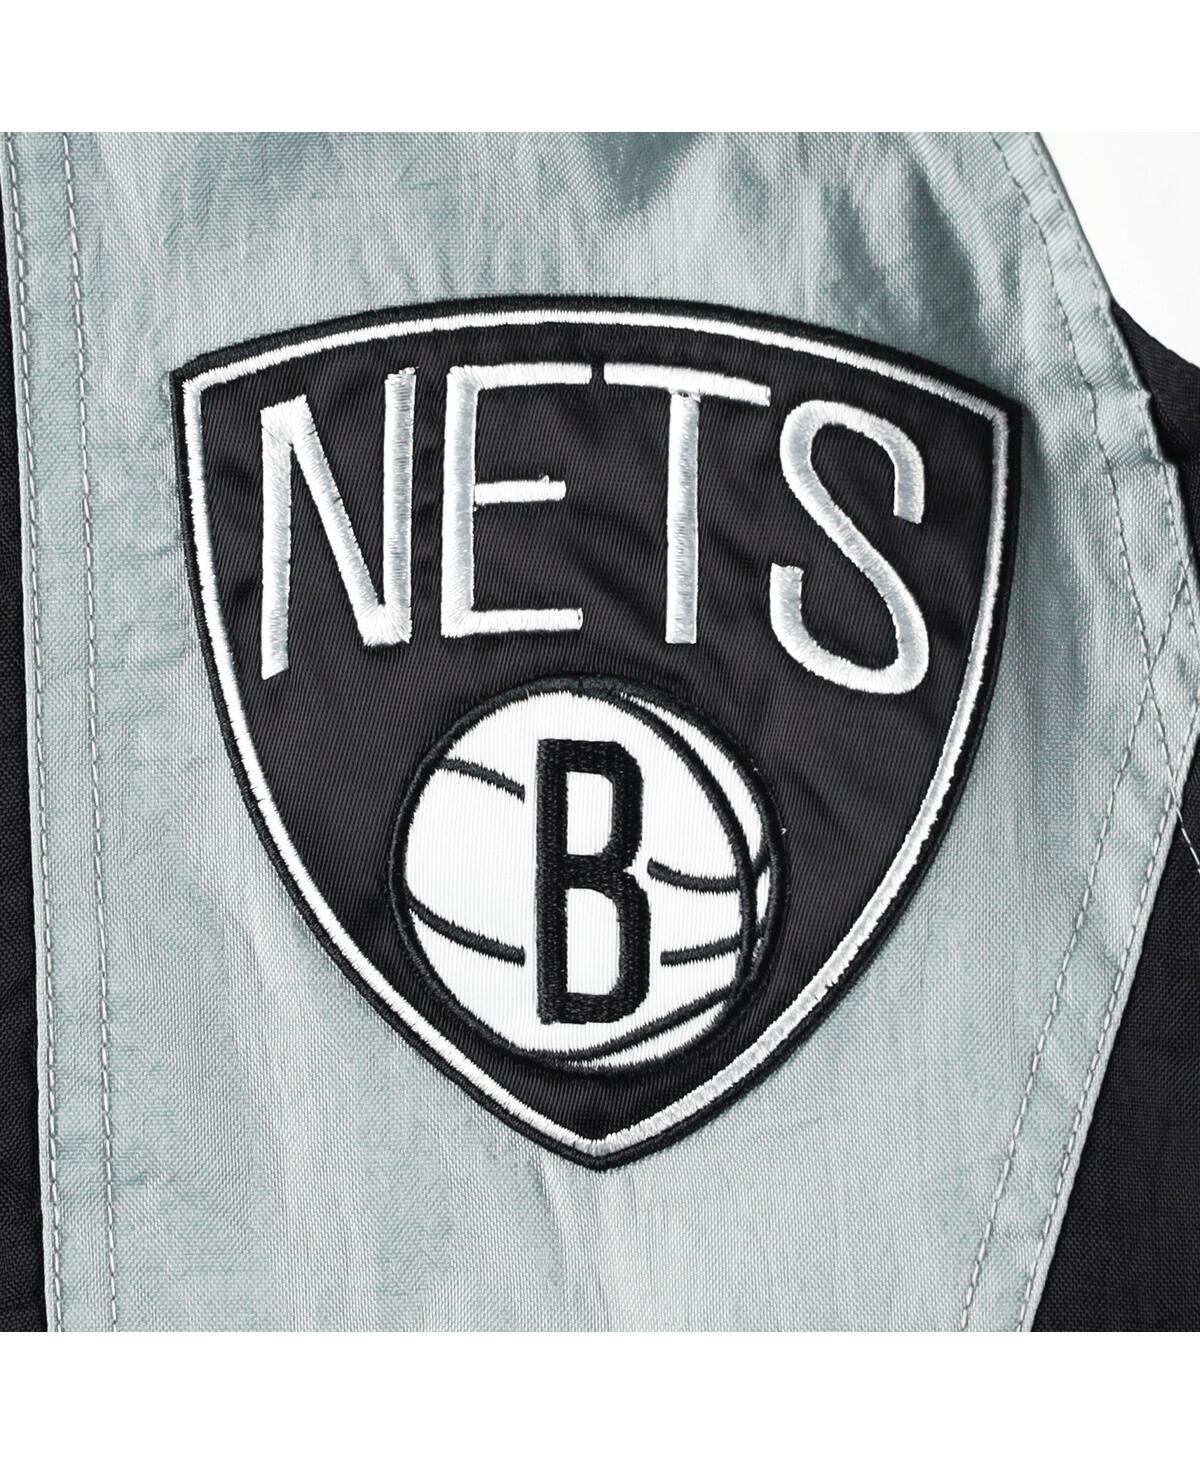 Shop Starter Men's  Black Brooklyn Nets Body Check Raglan Hoodie Half-zip Jacket